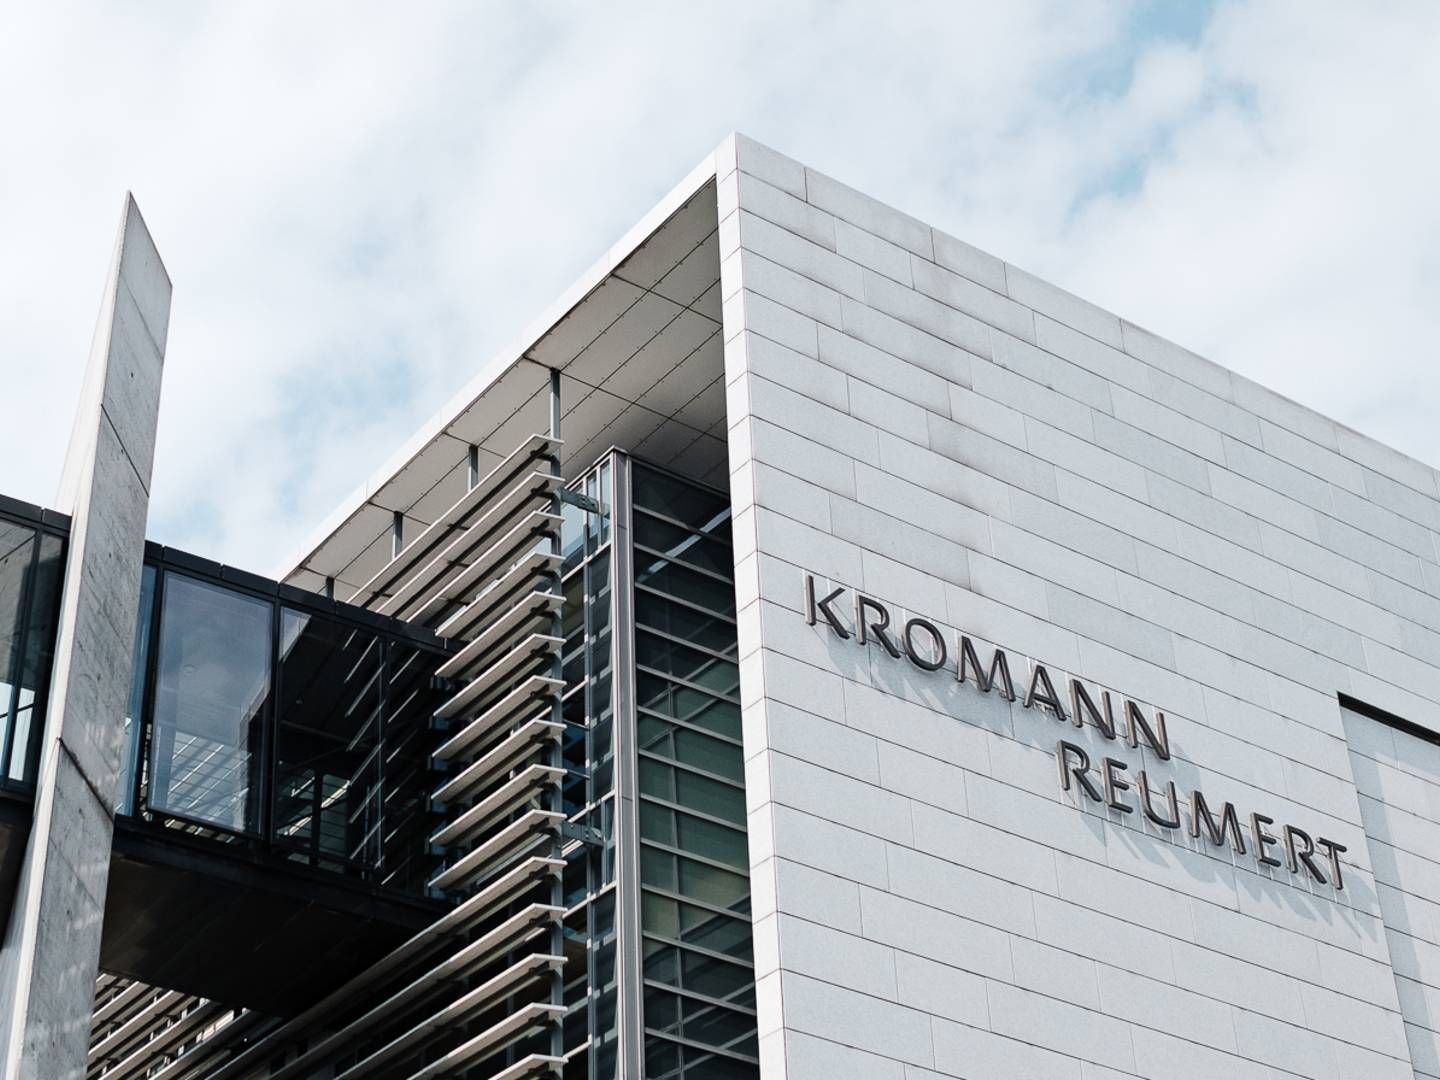 Fra 1. januar 2023 består partnerkredsen i Kromann Reumert af fire nye medlemmer. | Foto: PR